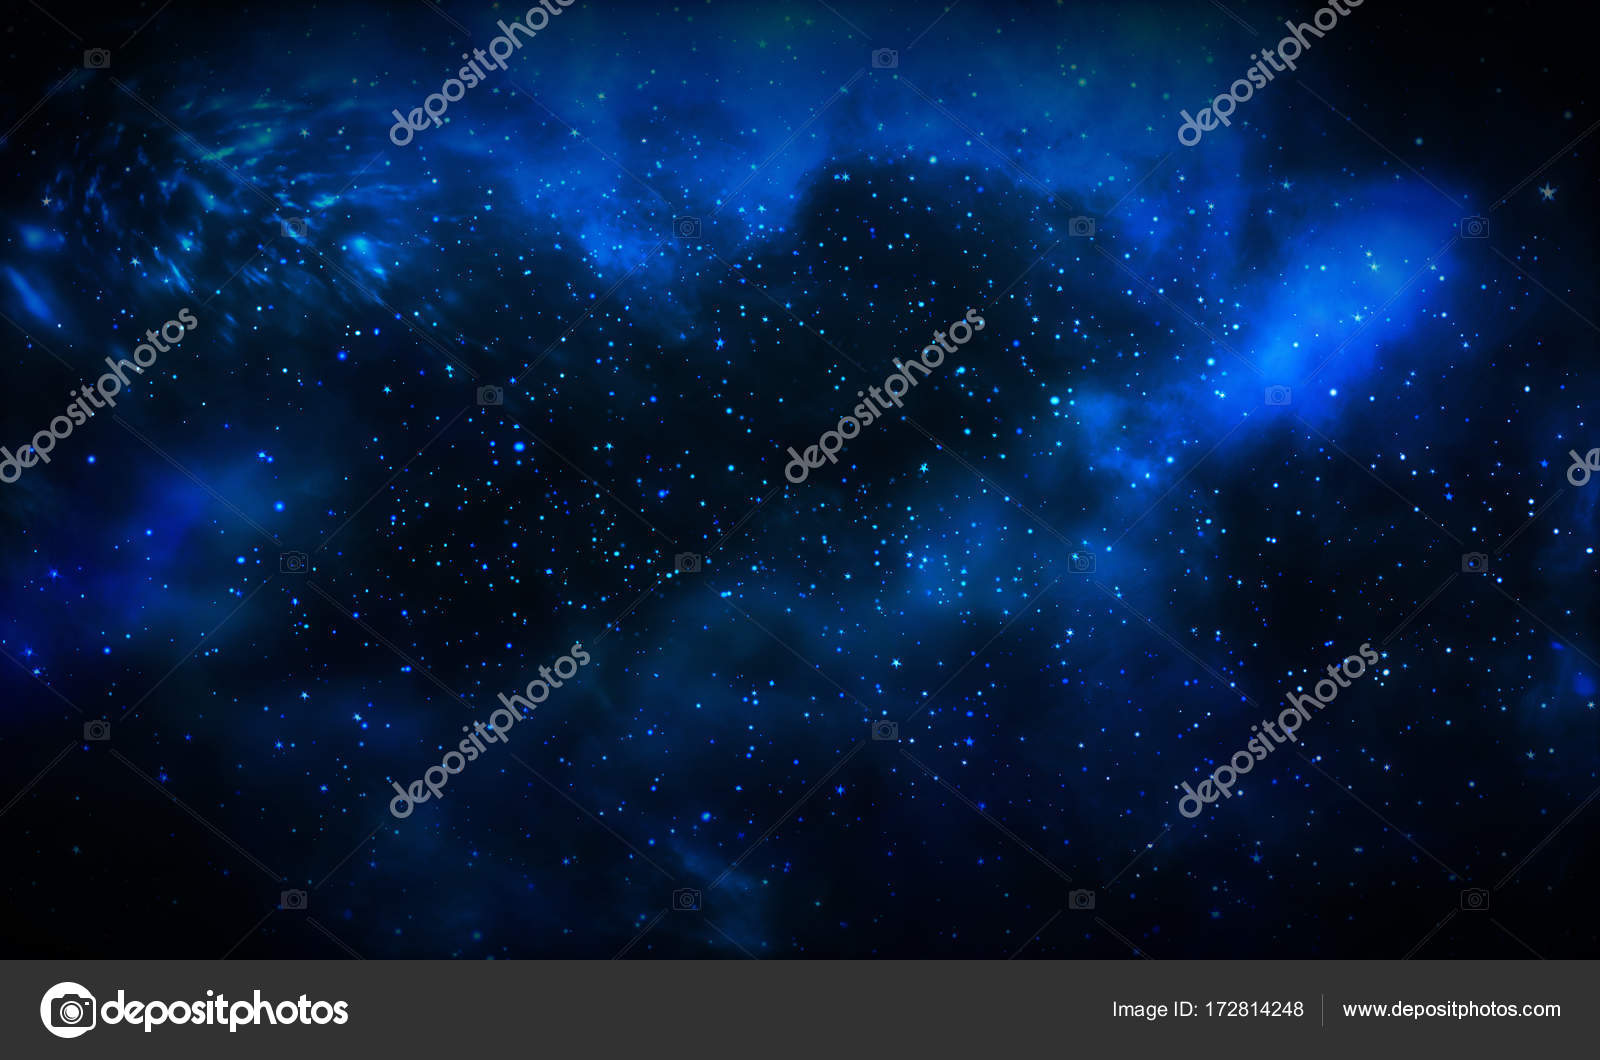 Galaxy background Stock Photos, Royalty Free Galaxy background Images |  Depositphotos